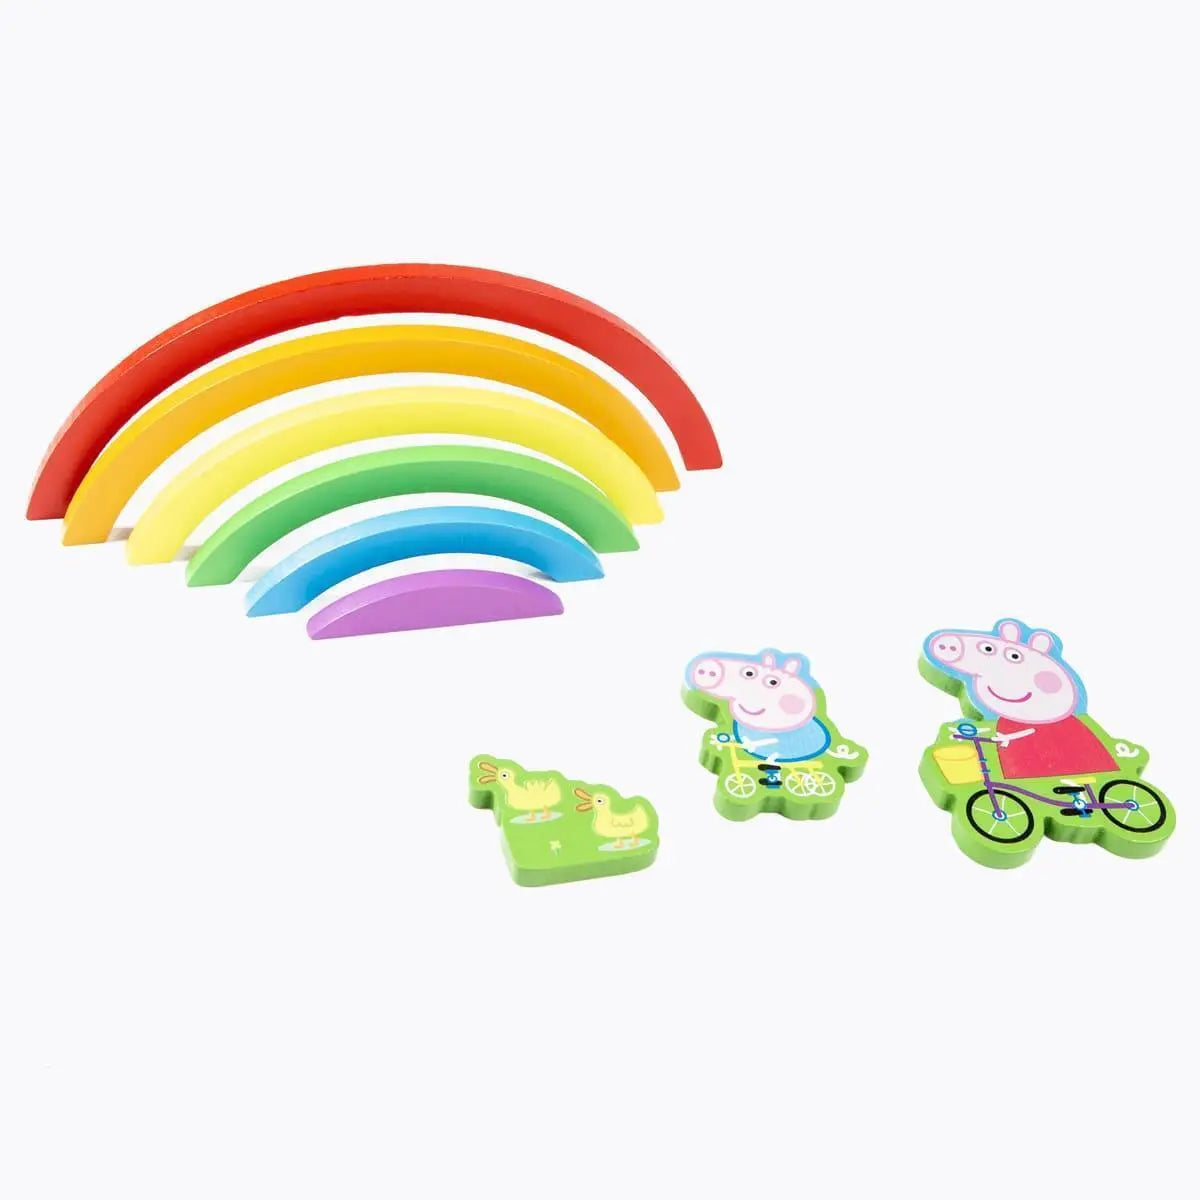 Peppa Pig Wooden 3D Rainbow Puzzle Peppa Pig